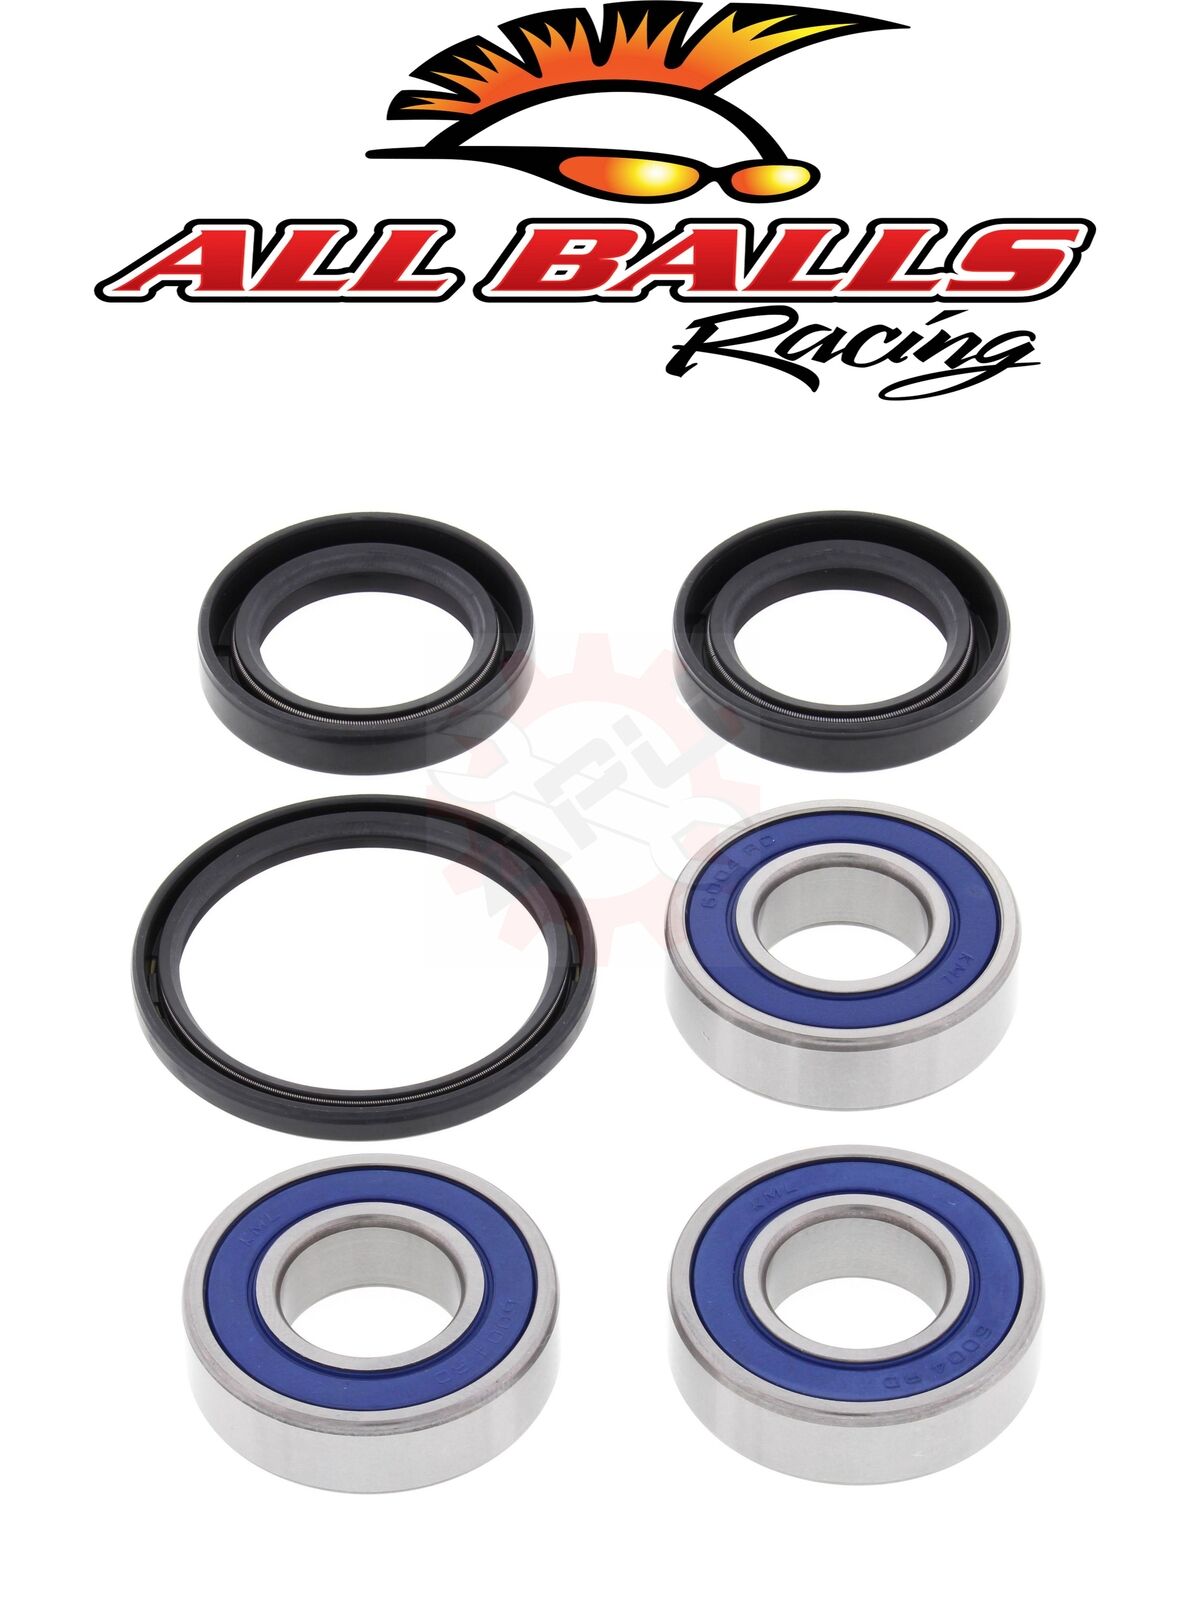 Rear Wheel Bearings CR500R 84-86, CR480R 83, CR250R 83-86 ALL BALLS 25-1115